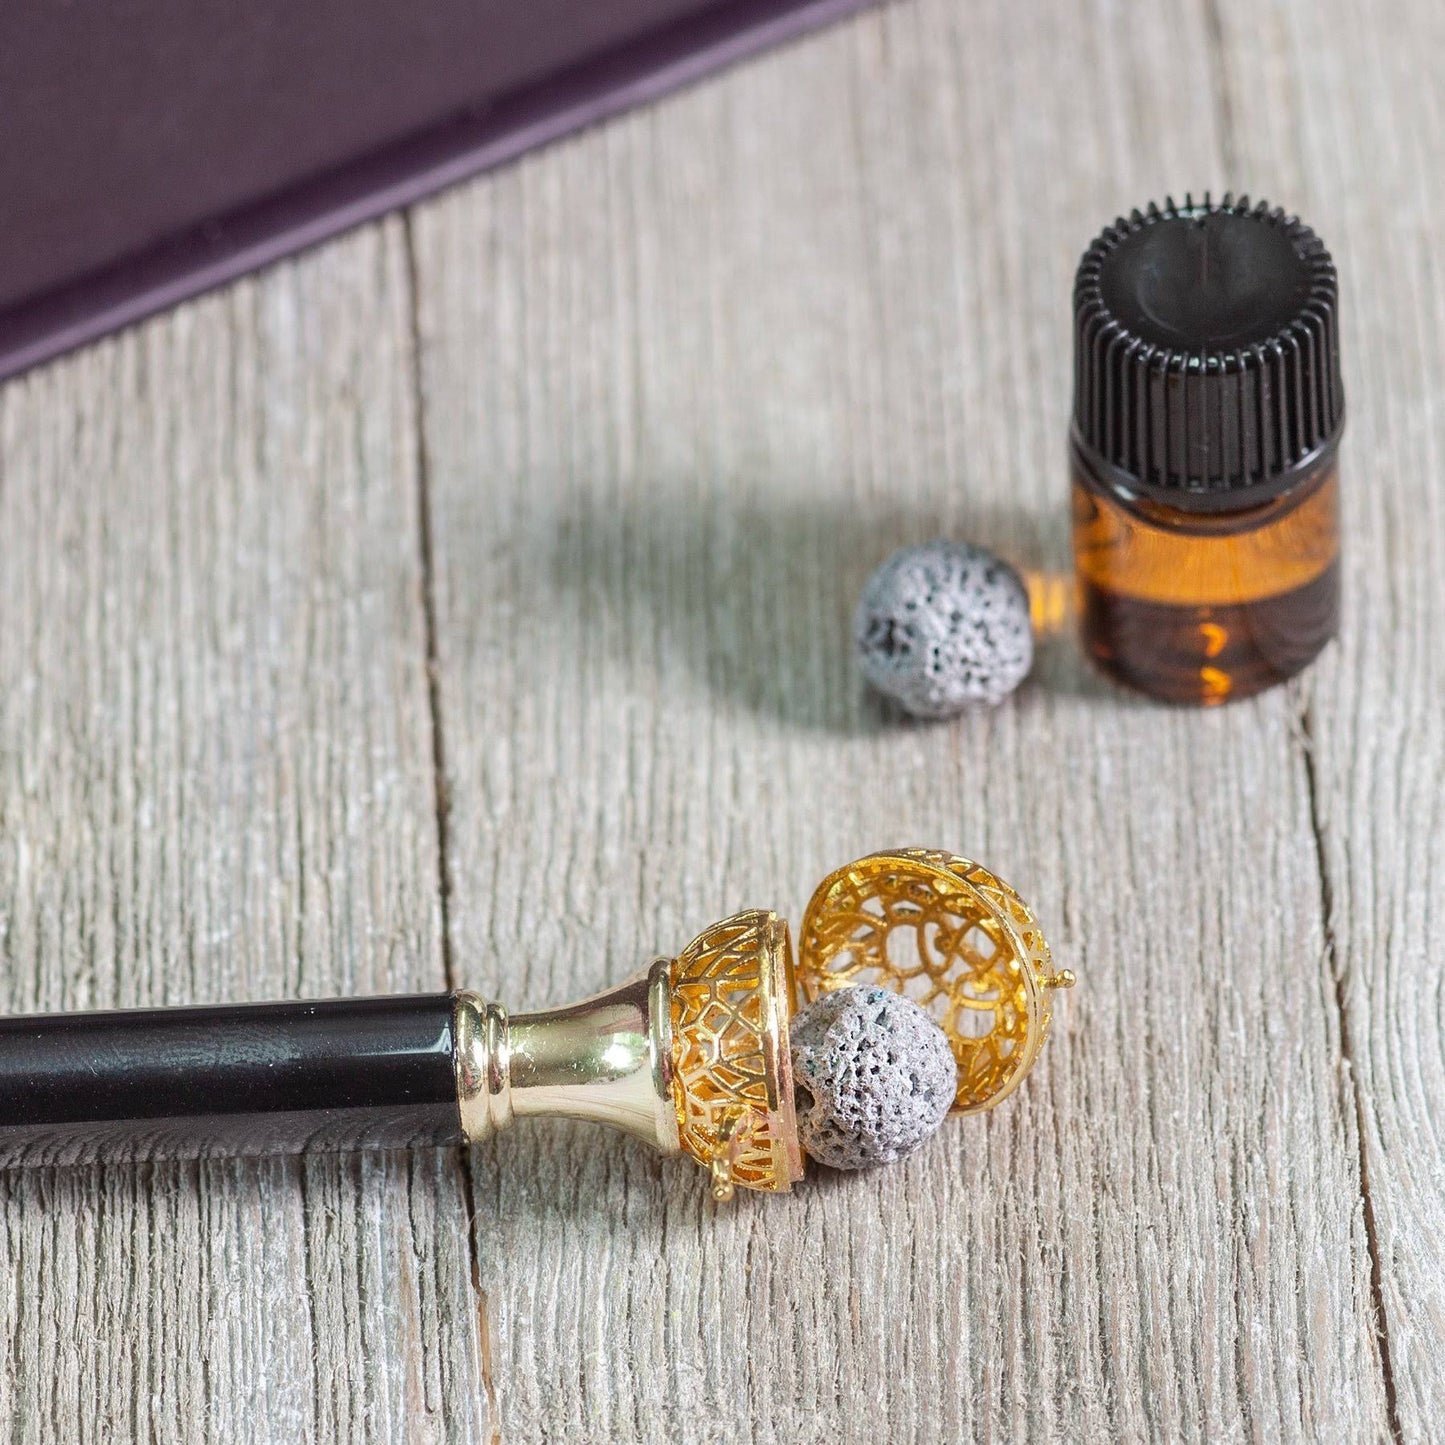 Aromatherapy Essential Oil Diffuser Pen